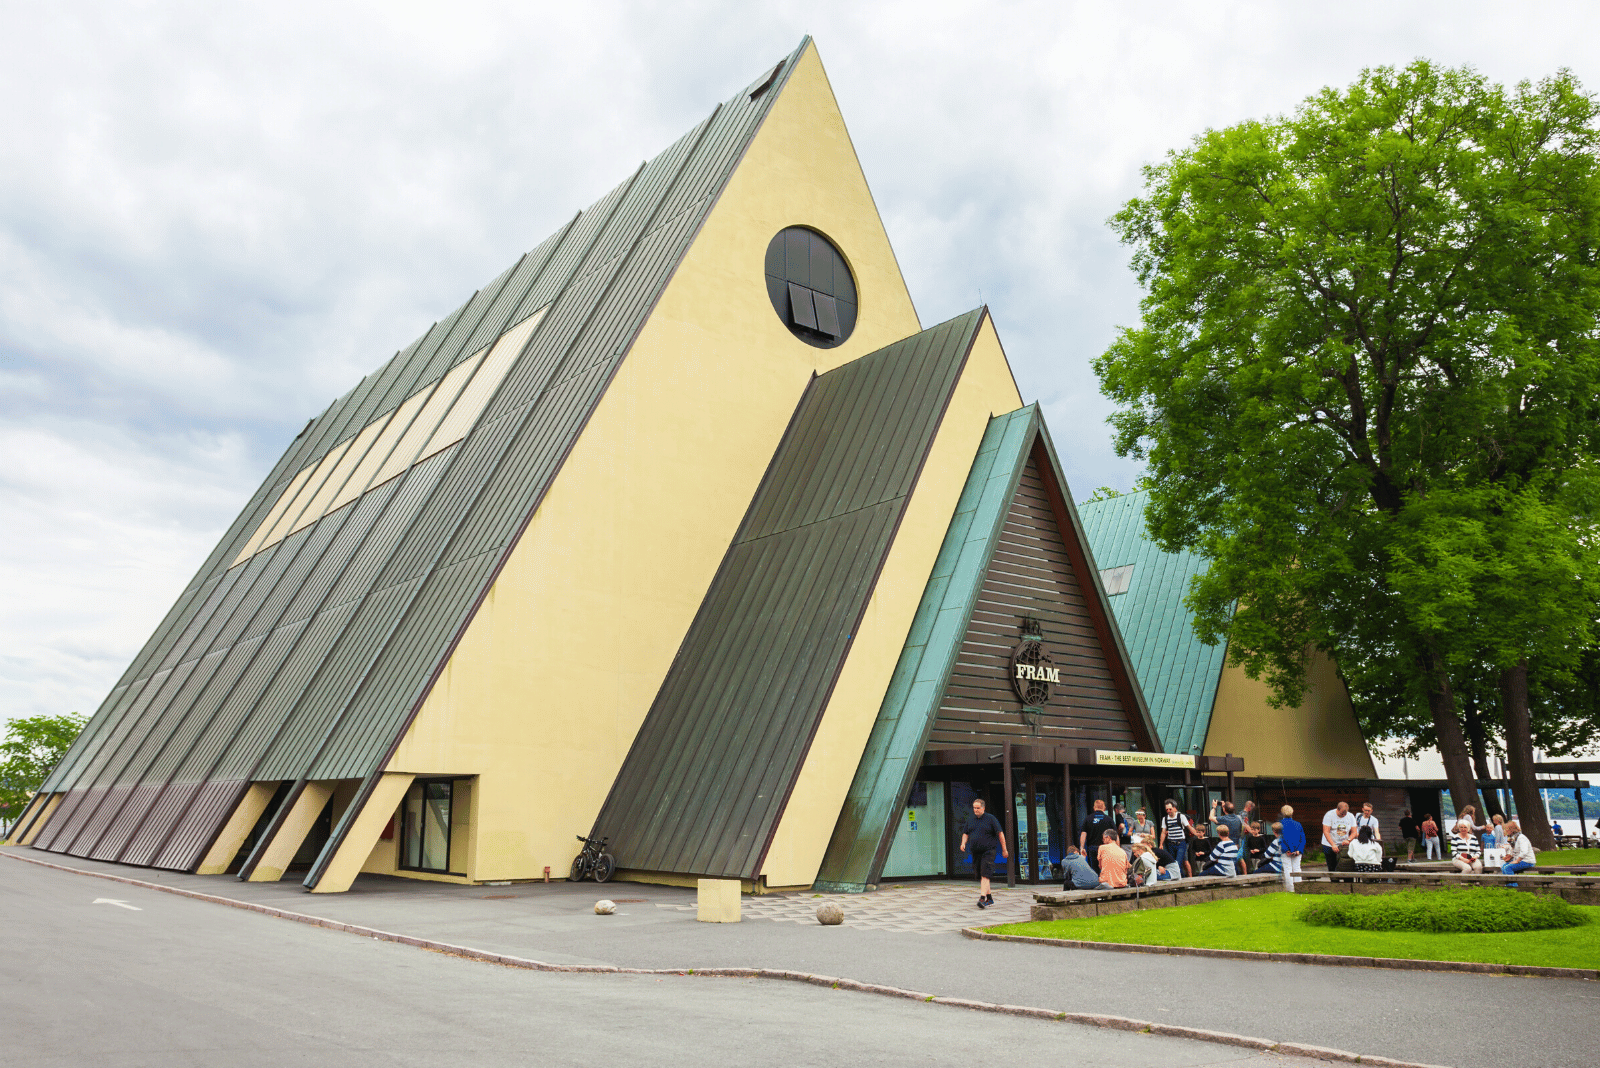 Fram Polar Expedition Museum, Norway